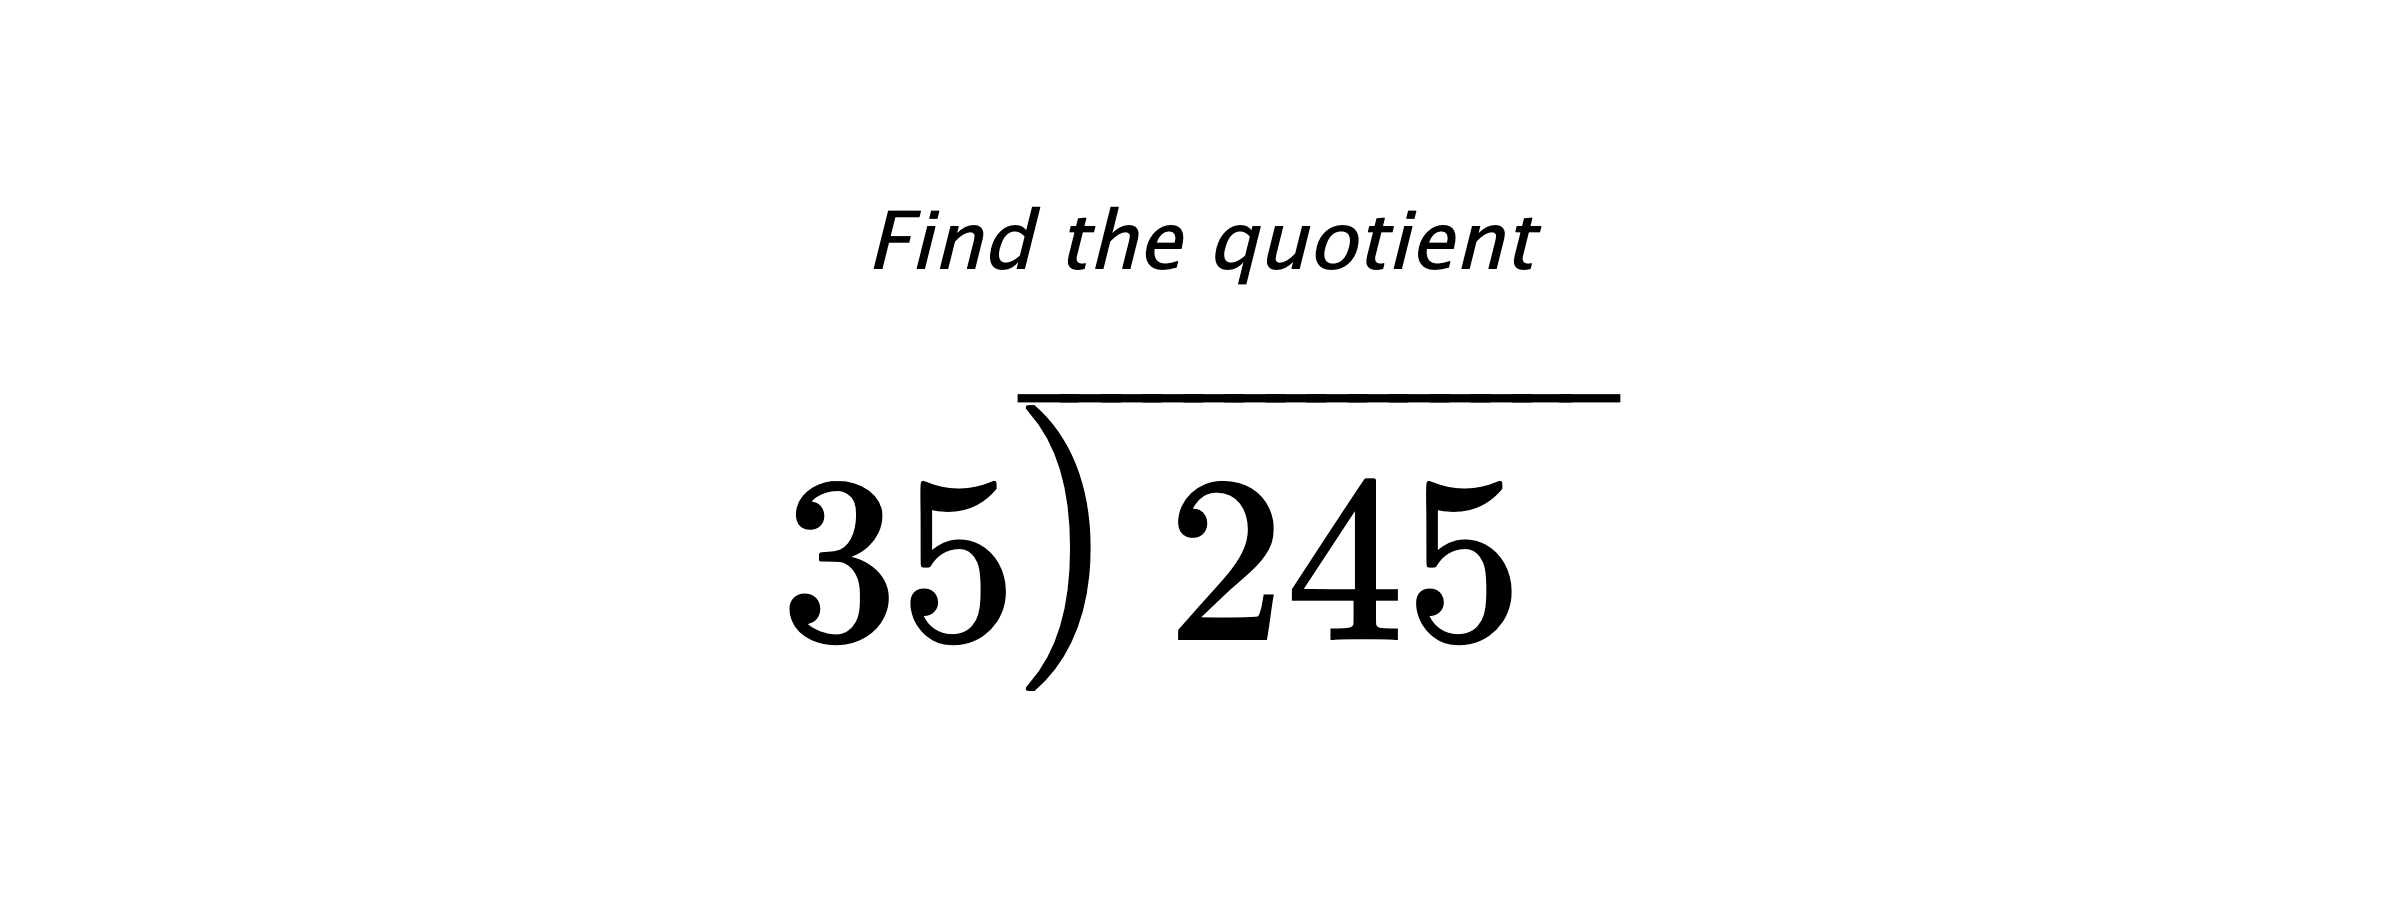 Find the quotient $ 35{\overline{\smash{\raise.3ex\hbox{$\big)$}}\,245\phantom{)}}} $